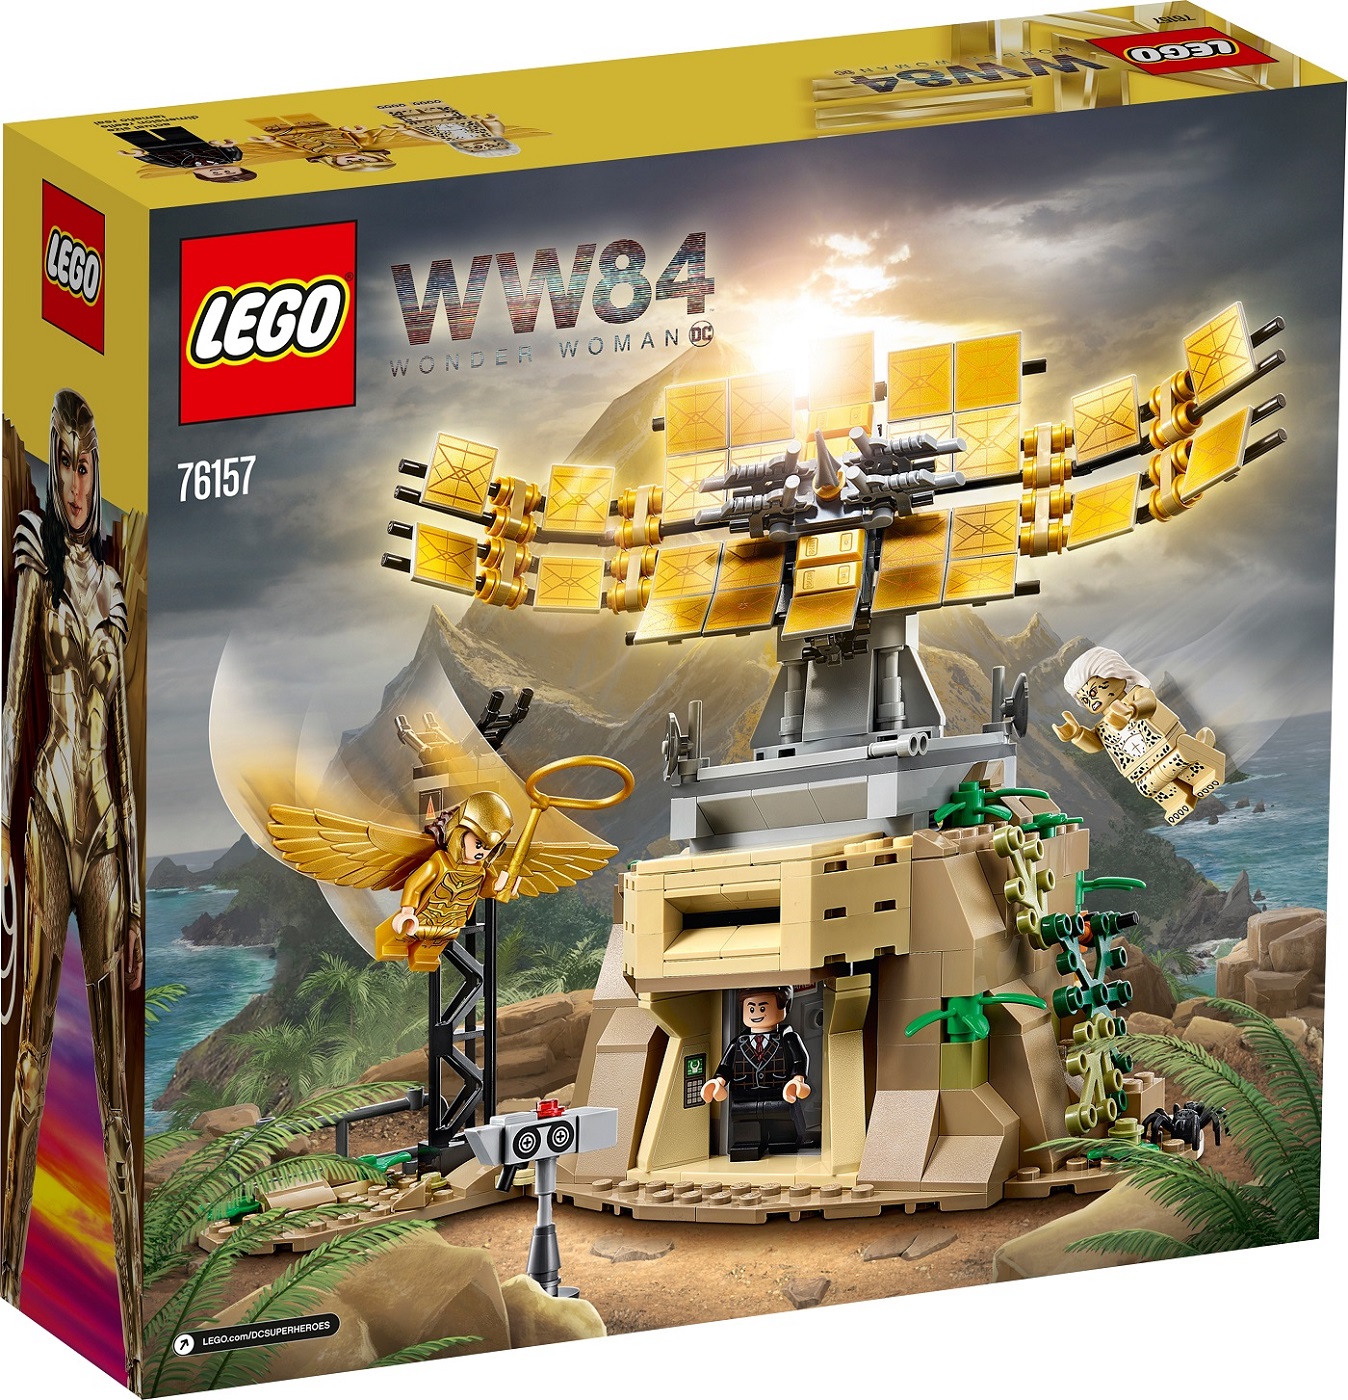 WW84 Wonder Woman vs Cheetah ( Lego 76157 ) imagen d